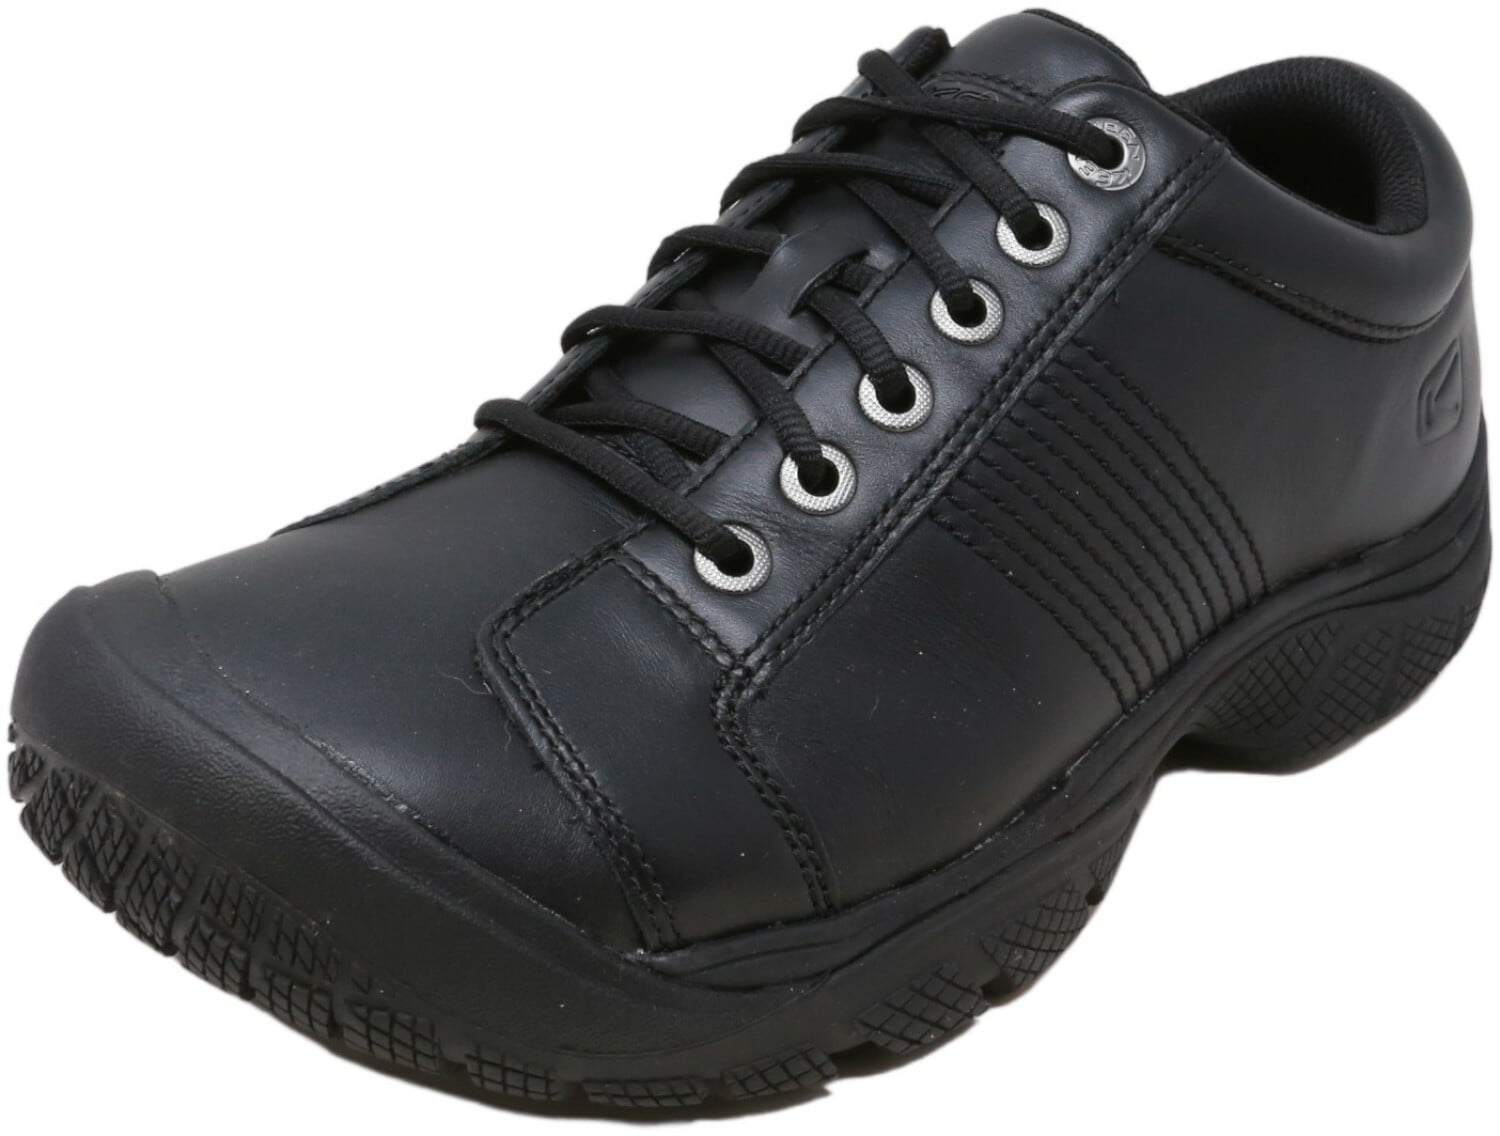 Keen Men's Ptc Oxford Black Leather - 10.5M | Walmart Canada